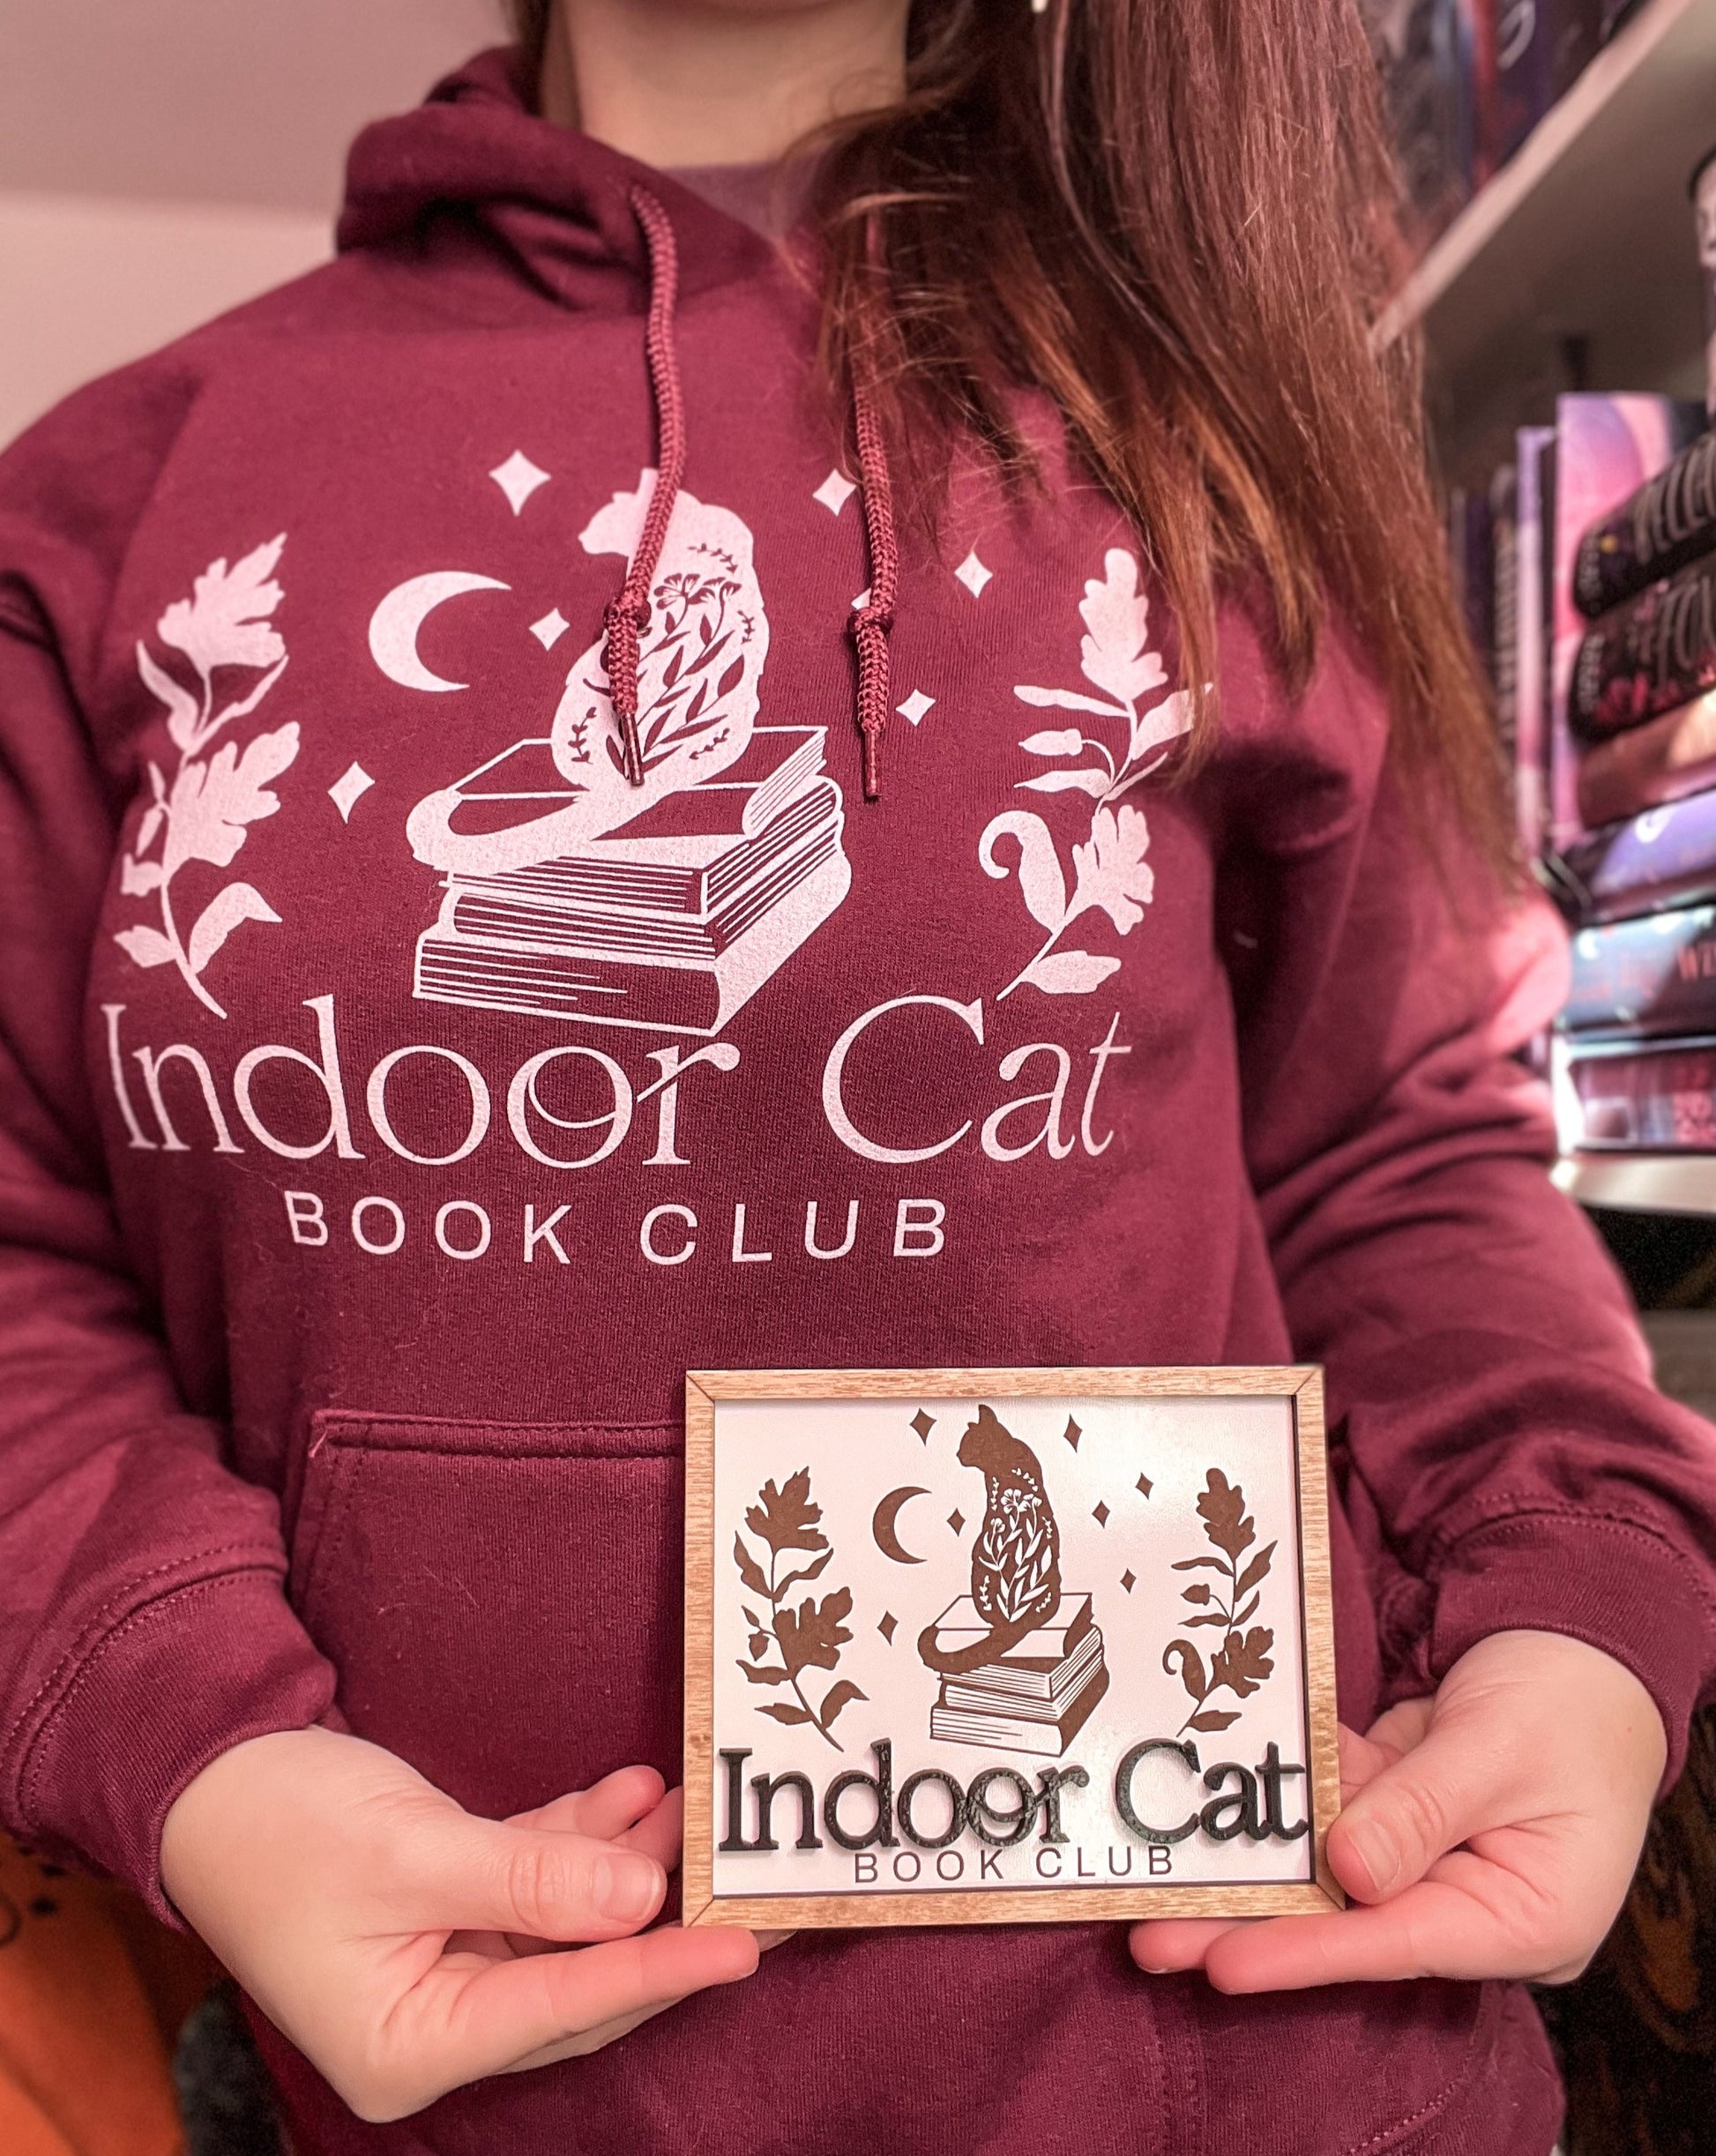 Woman next to bookshelf wearing indoor cat hoodie in maroon with white design